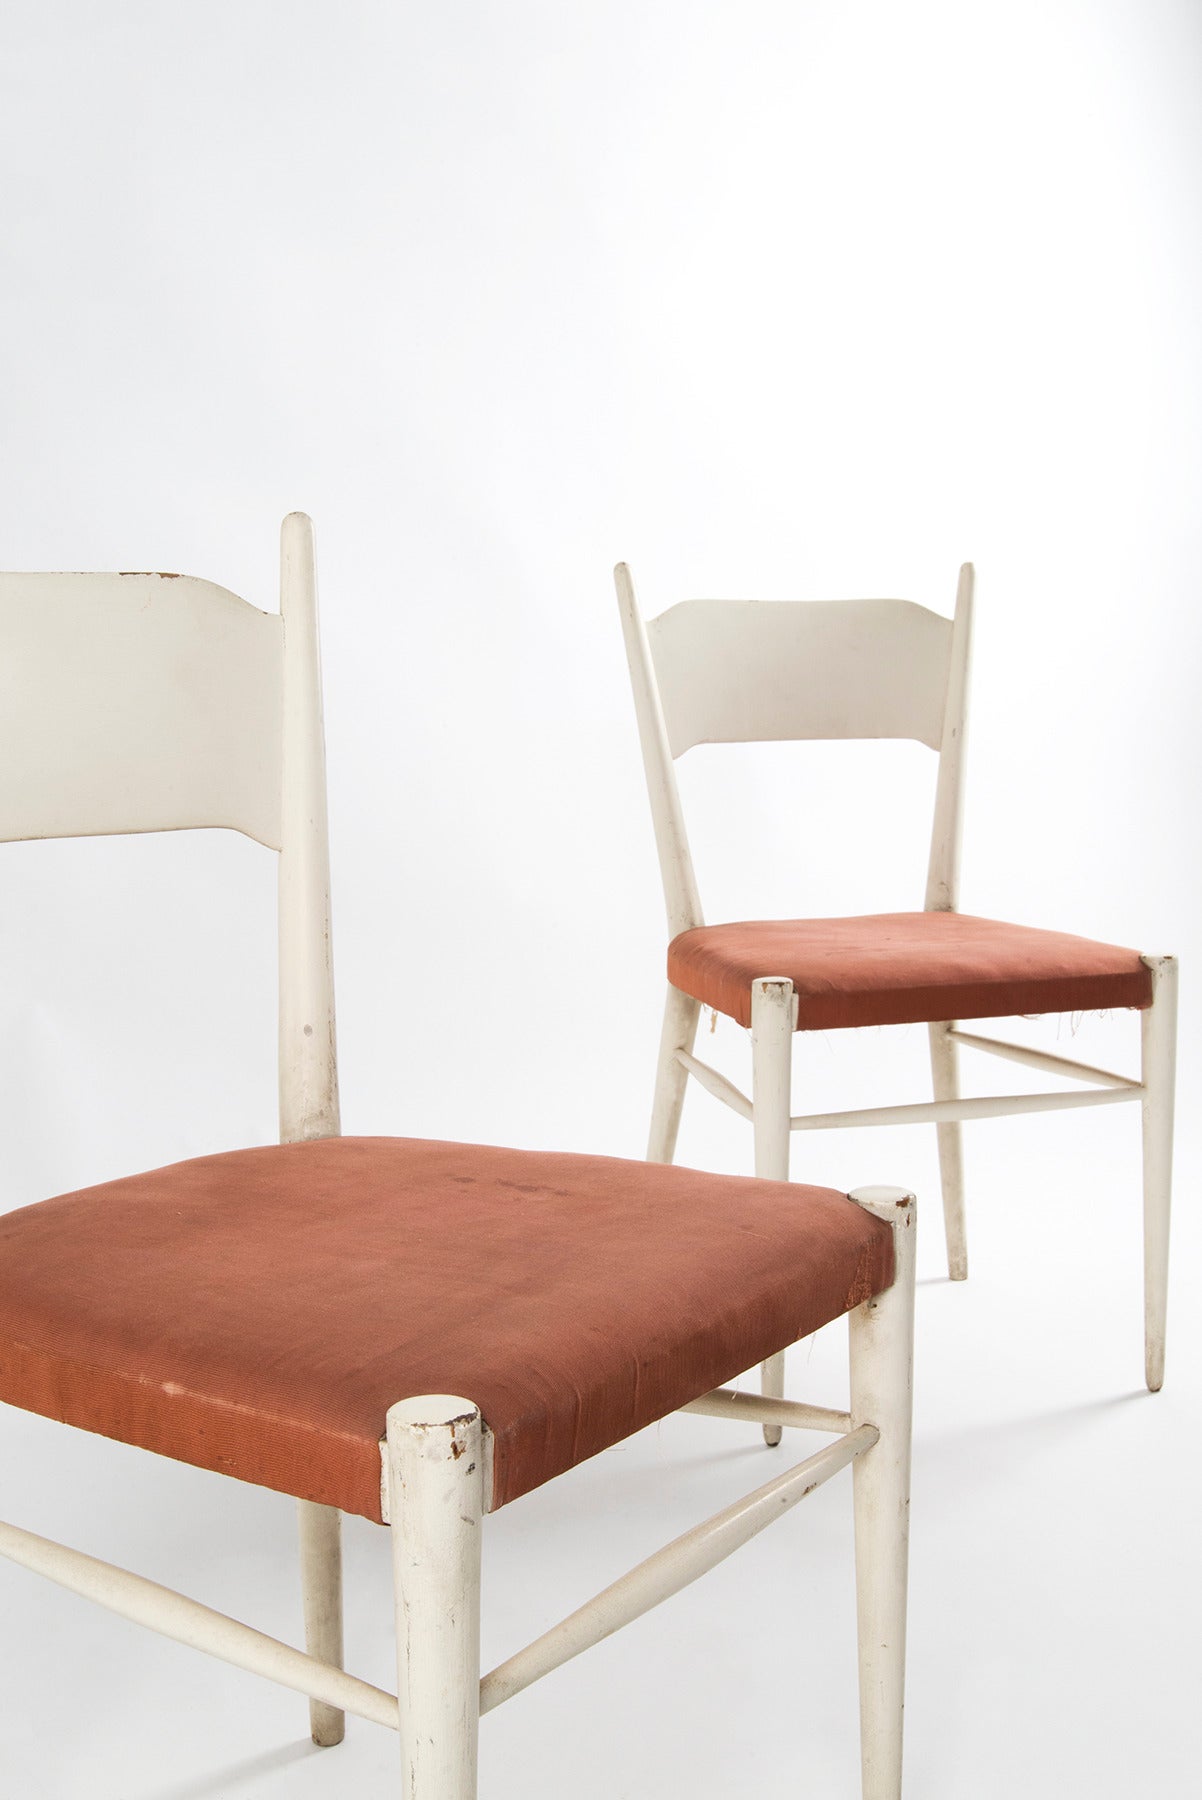 Italian Pair of Chairs by Osvaldo Borsani for Arredamenti Borsani Varedo, 1950